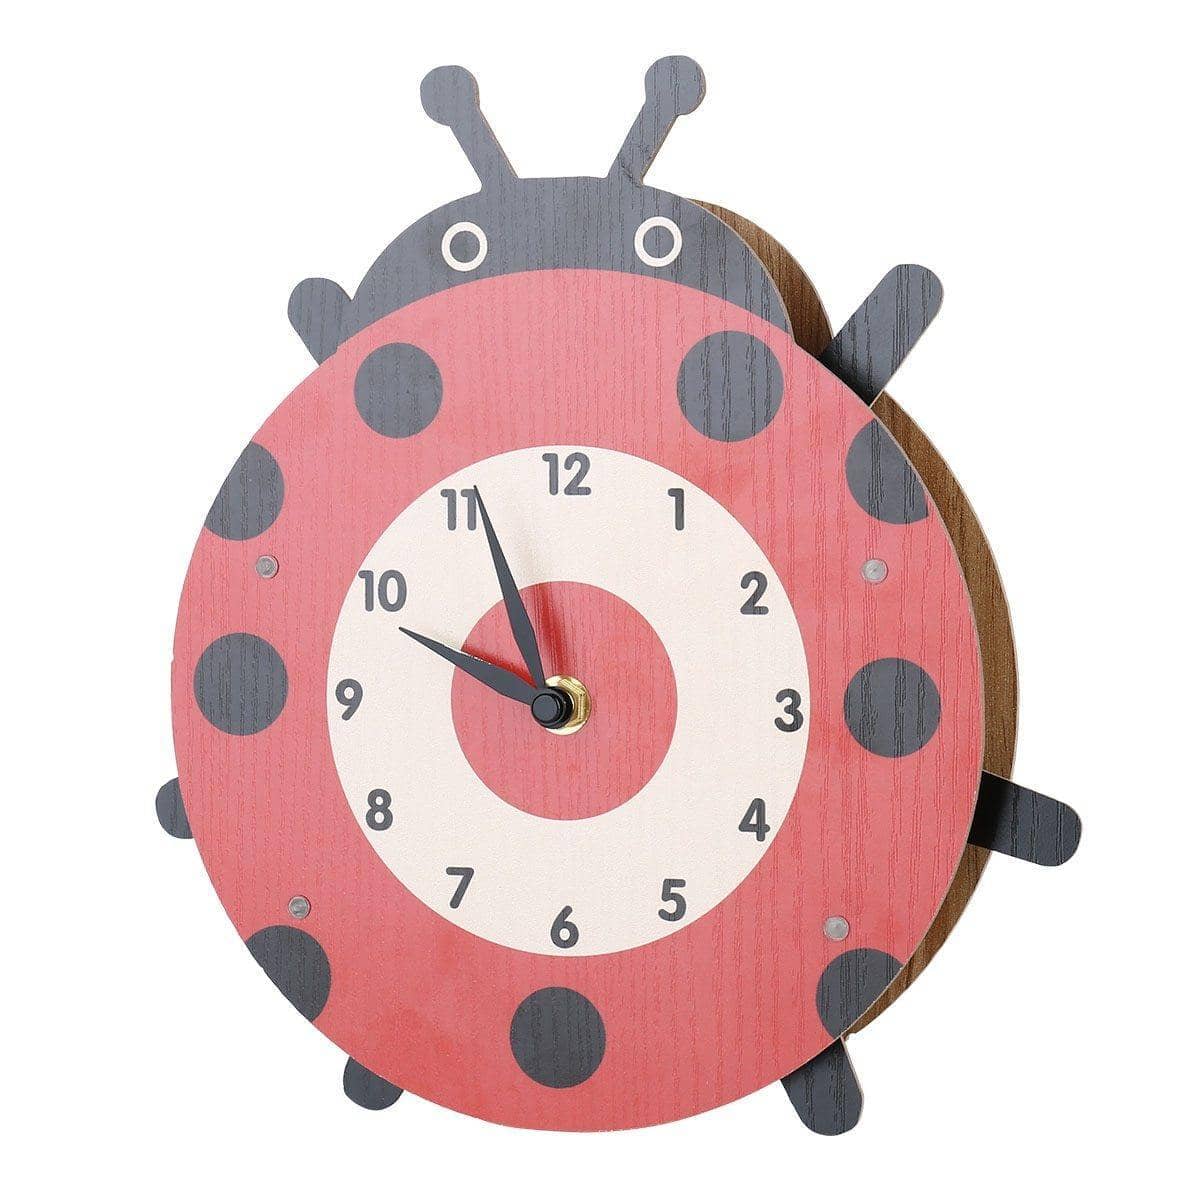 Cartoon Ladybug Wall Clock - Fun & Whimsical Home Decor